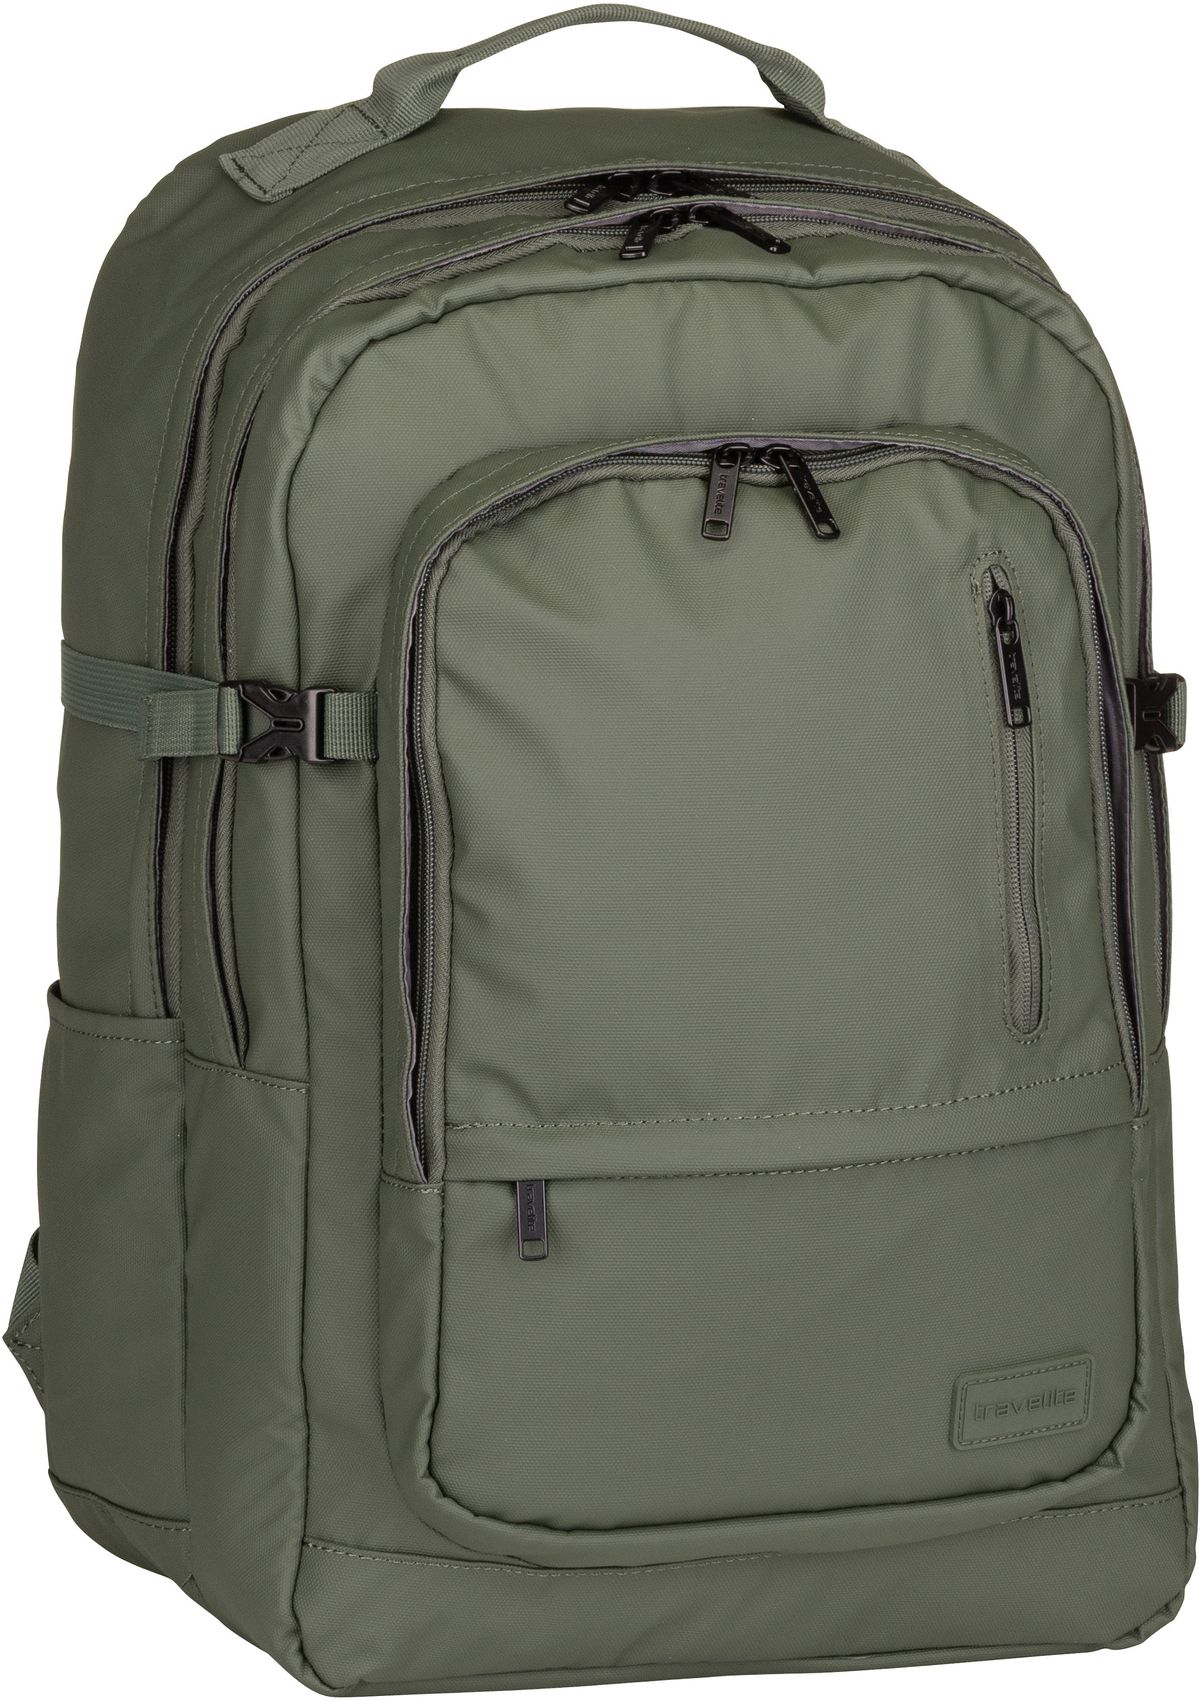 travelite Basics Rollup Daypack  in Oliv (28 Liter), Rucksack / Backpack